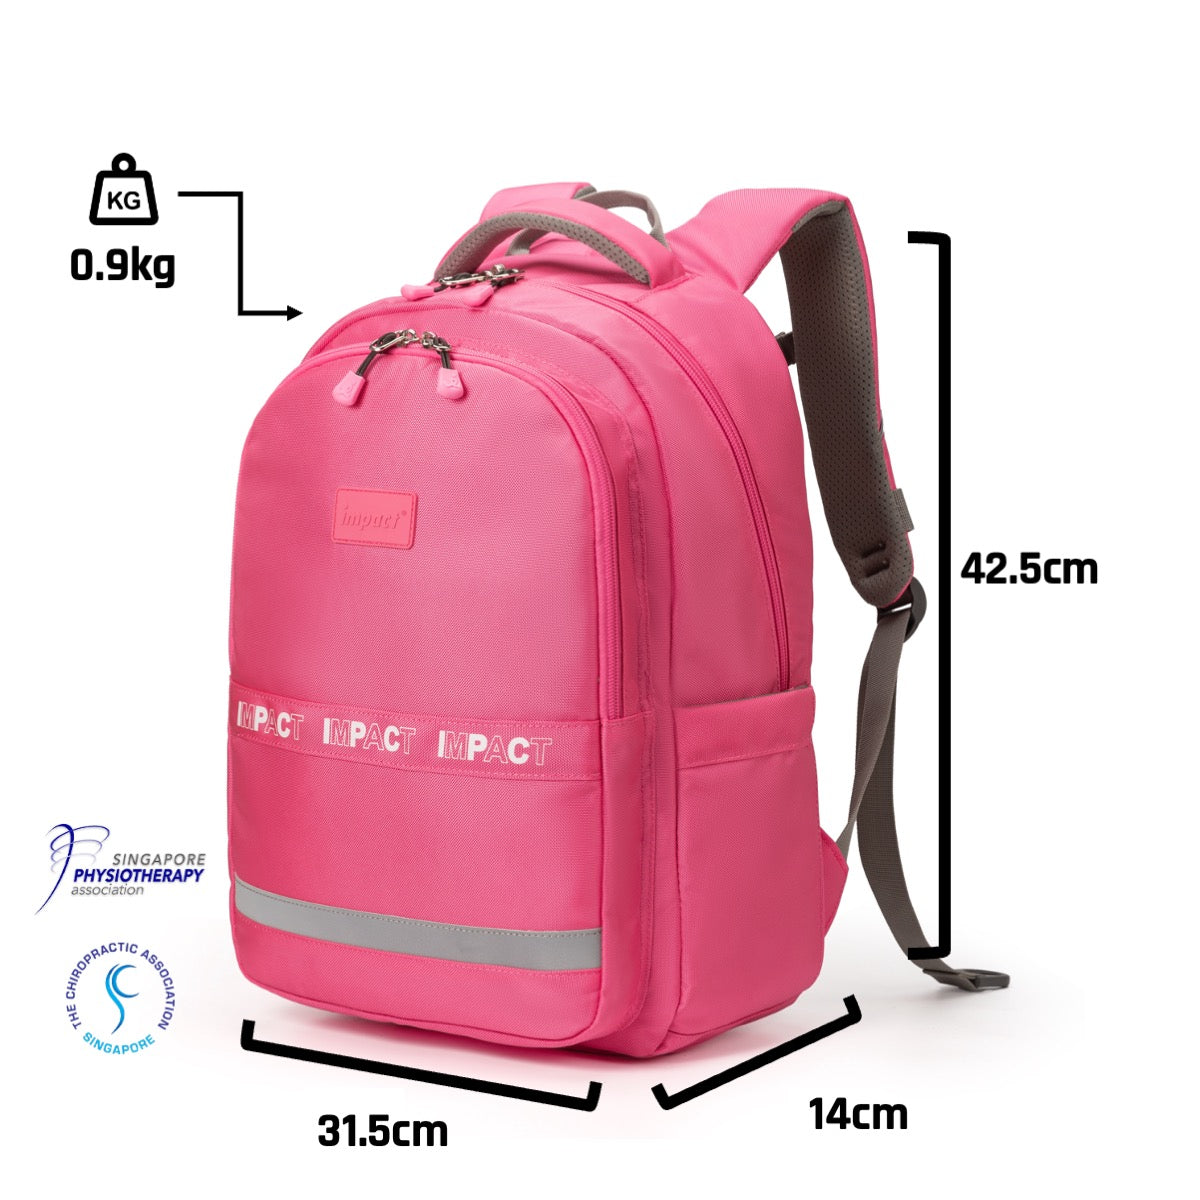 Impact School Bag IPEG-2368 - Ergo-Comfort Spinal Support Backpack